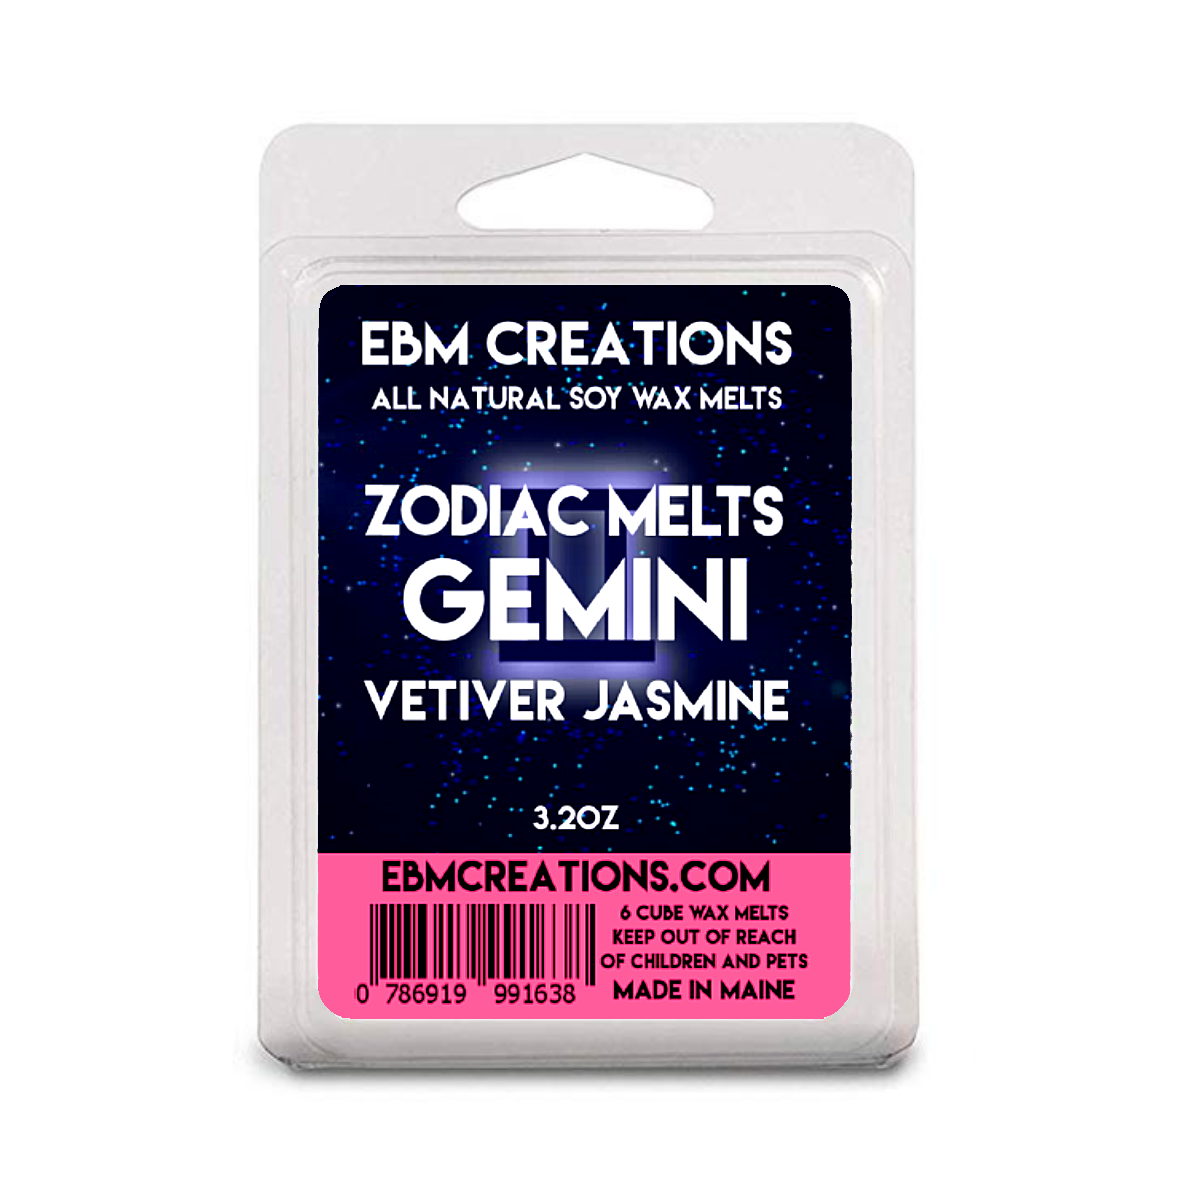 Gemini - Vetiver Jasmine Zodiac Melts - 3.2 oz Clamshell